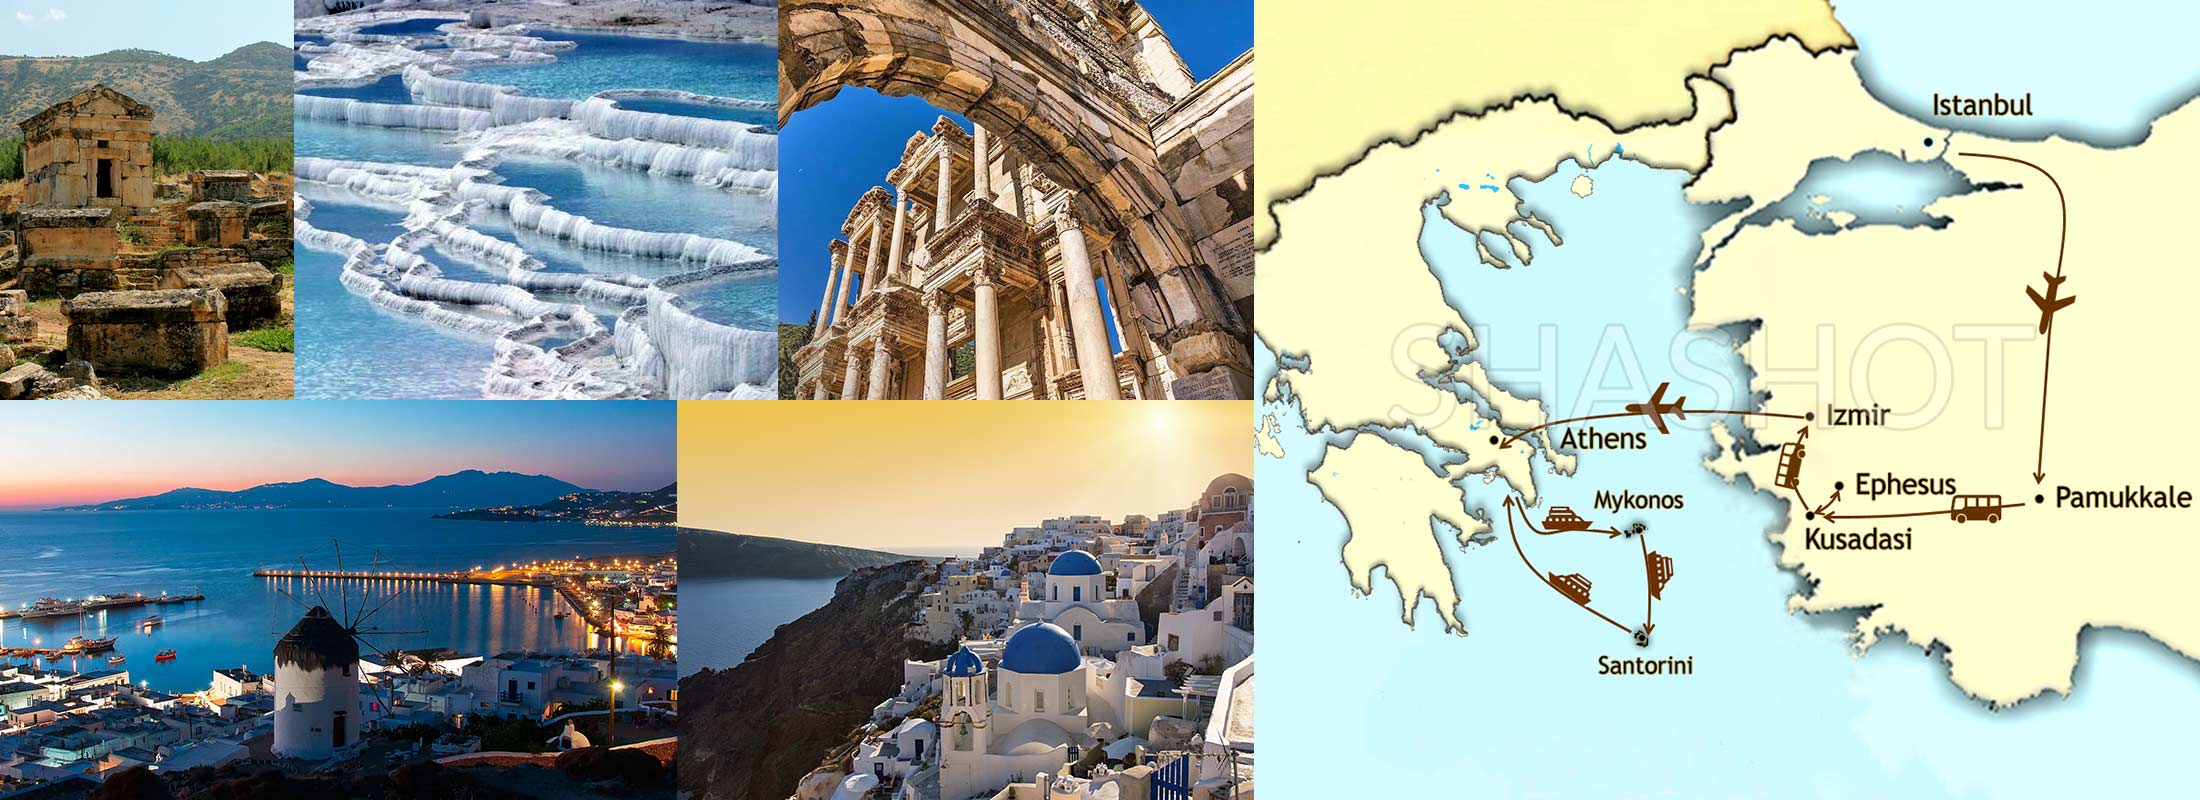 6-days-greece-turkey-package-tours-santorini-mykonos-ephesus-pamukkale-map